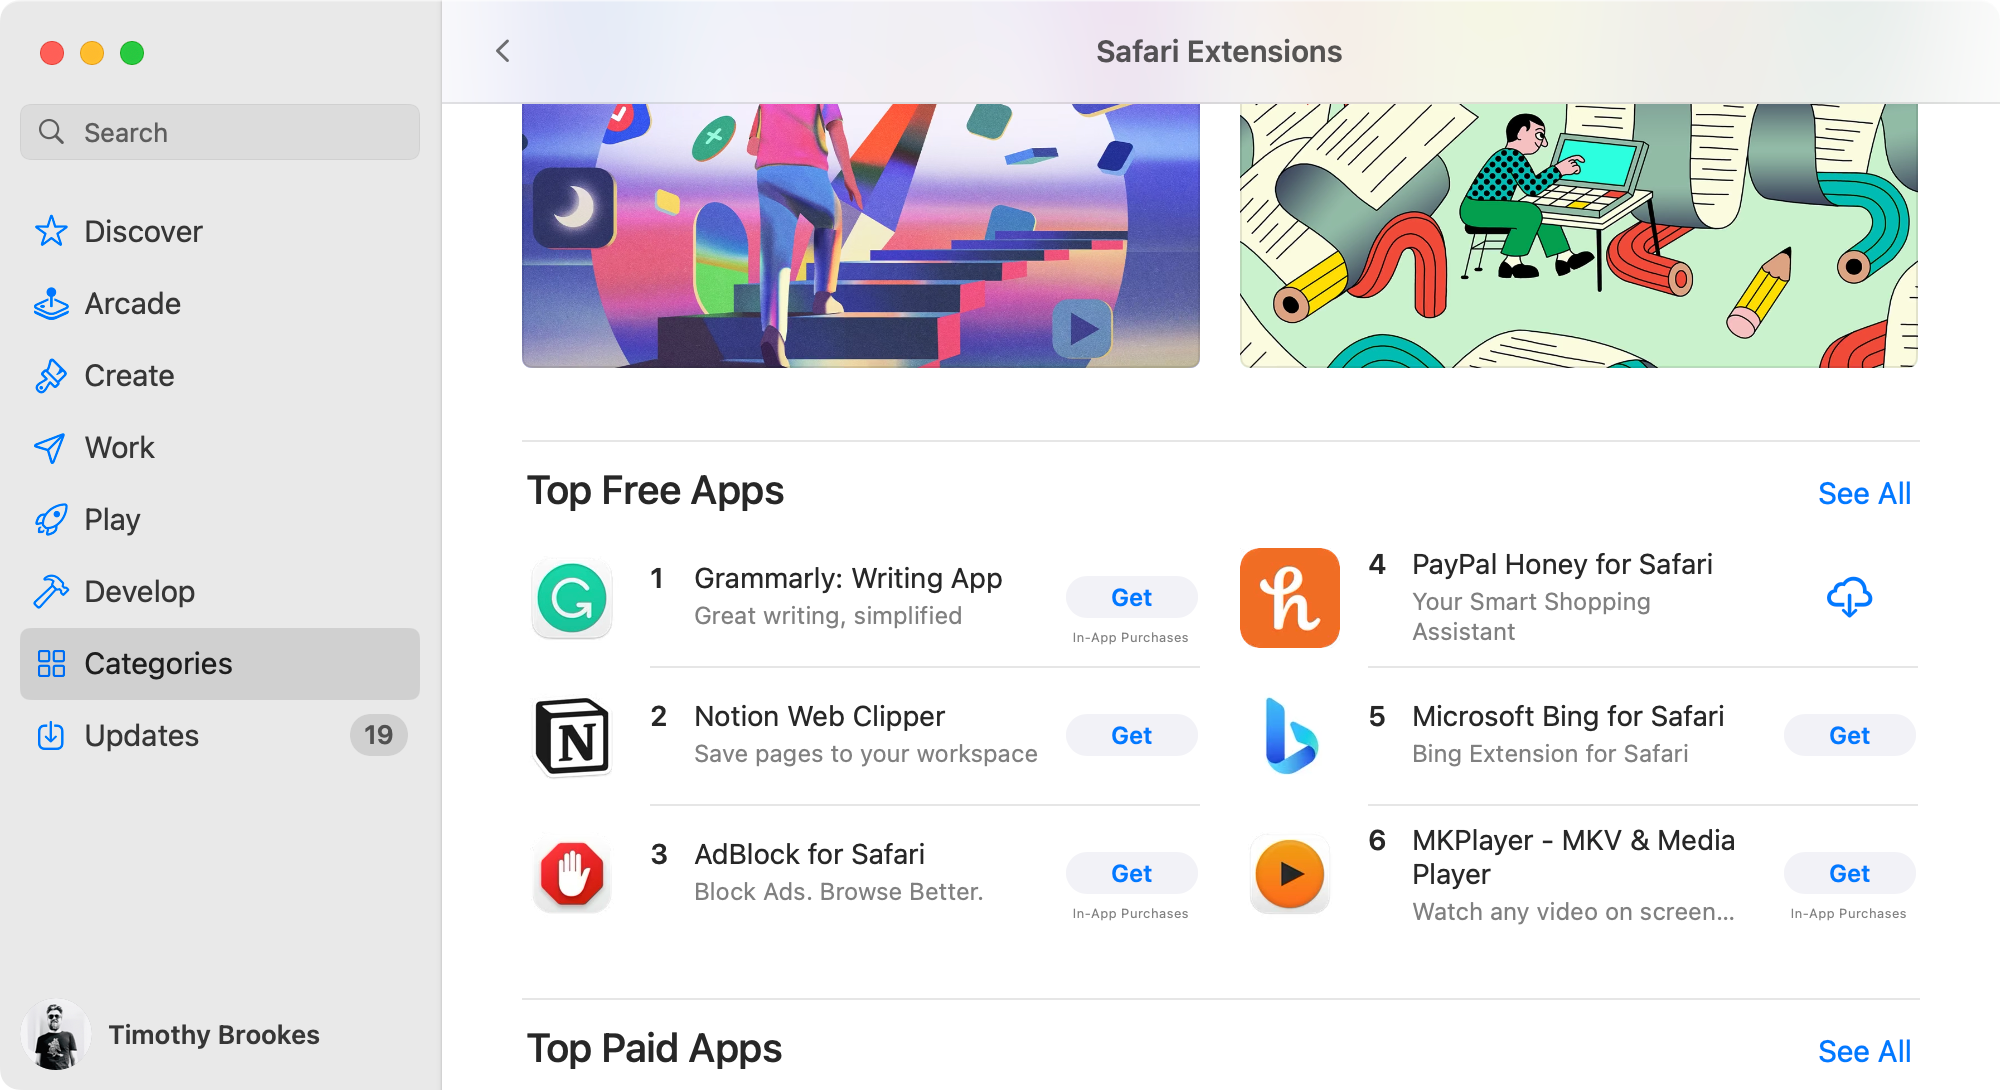 Safari Extensions on the Mac App Store